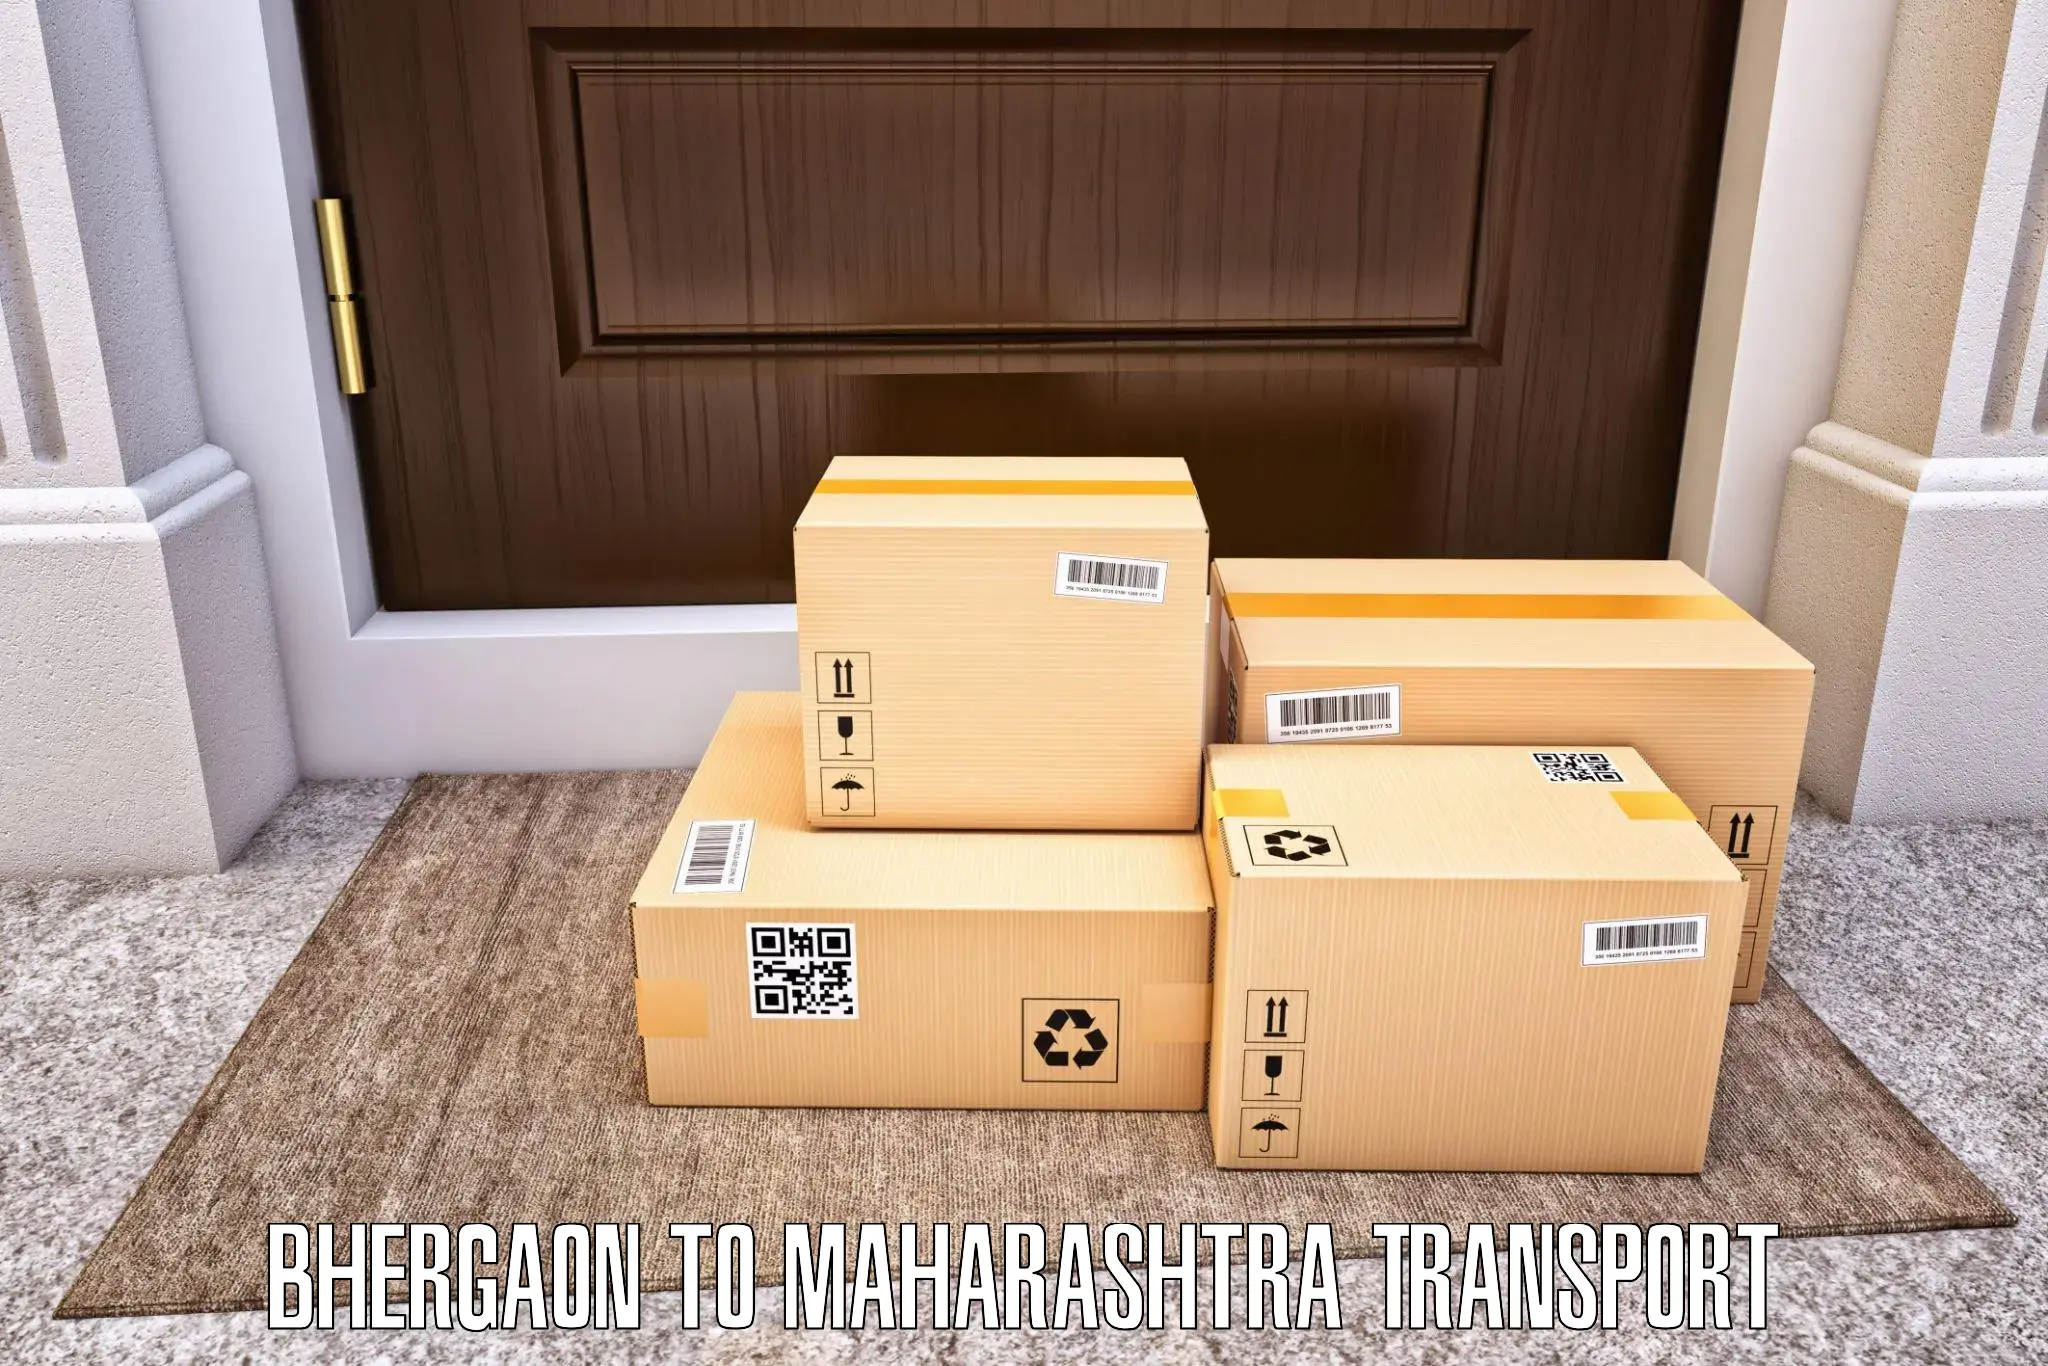 Goods delivery service Bhergaon to Khandala Pune